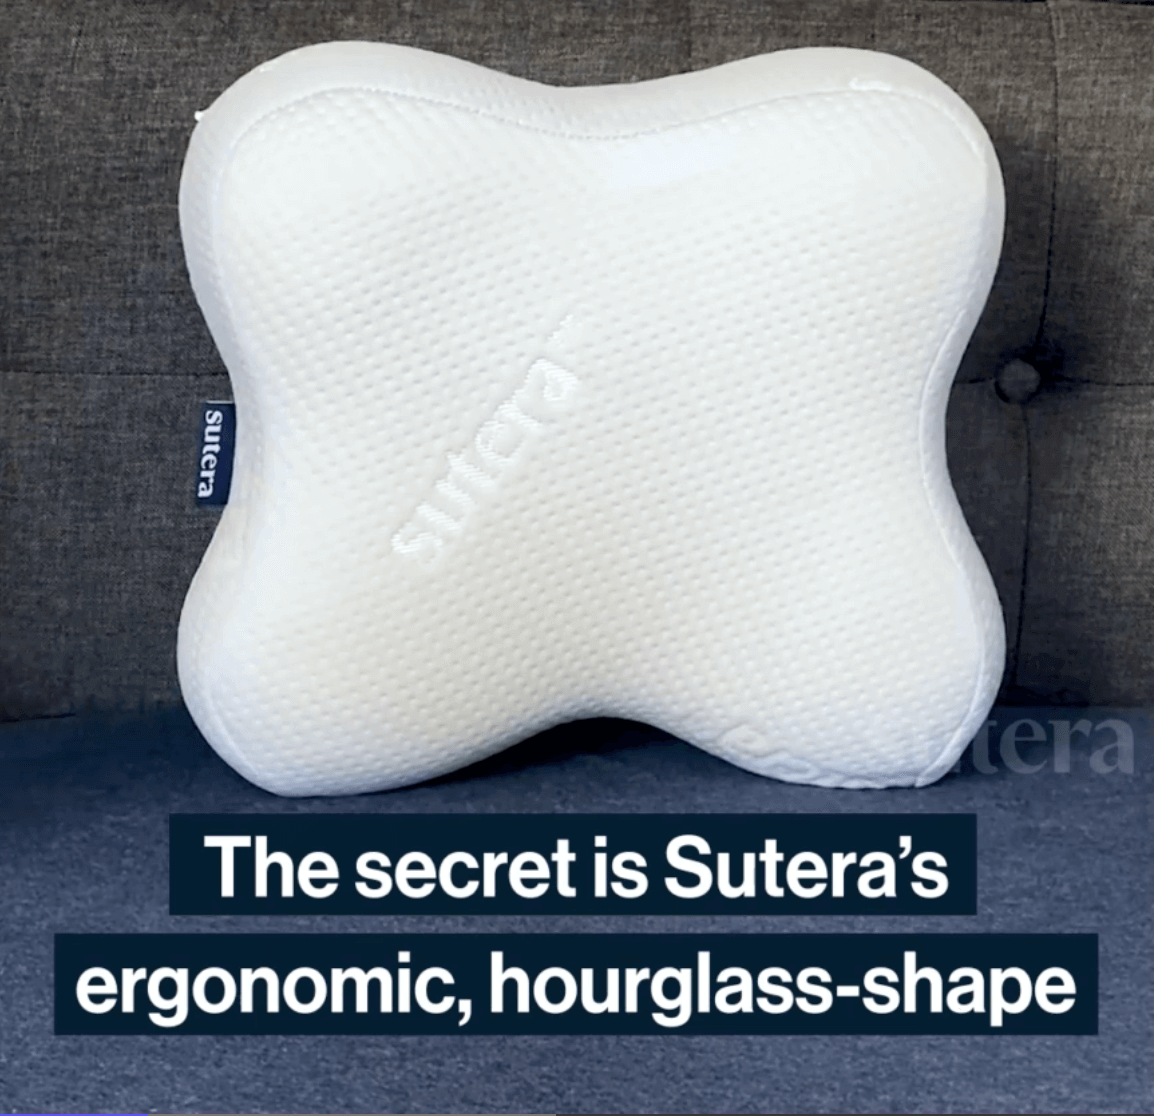 Sutera Memory Foam Pillow Reviews 2023 - Don't Buy Sutera Pillow Until You  Read This!